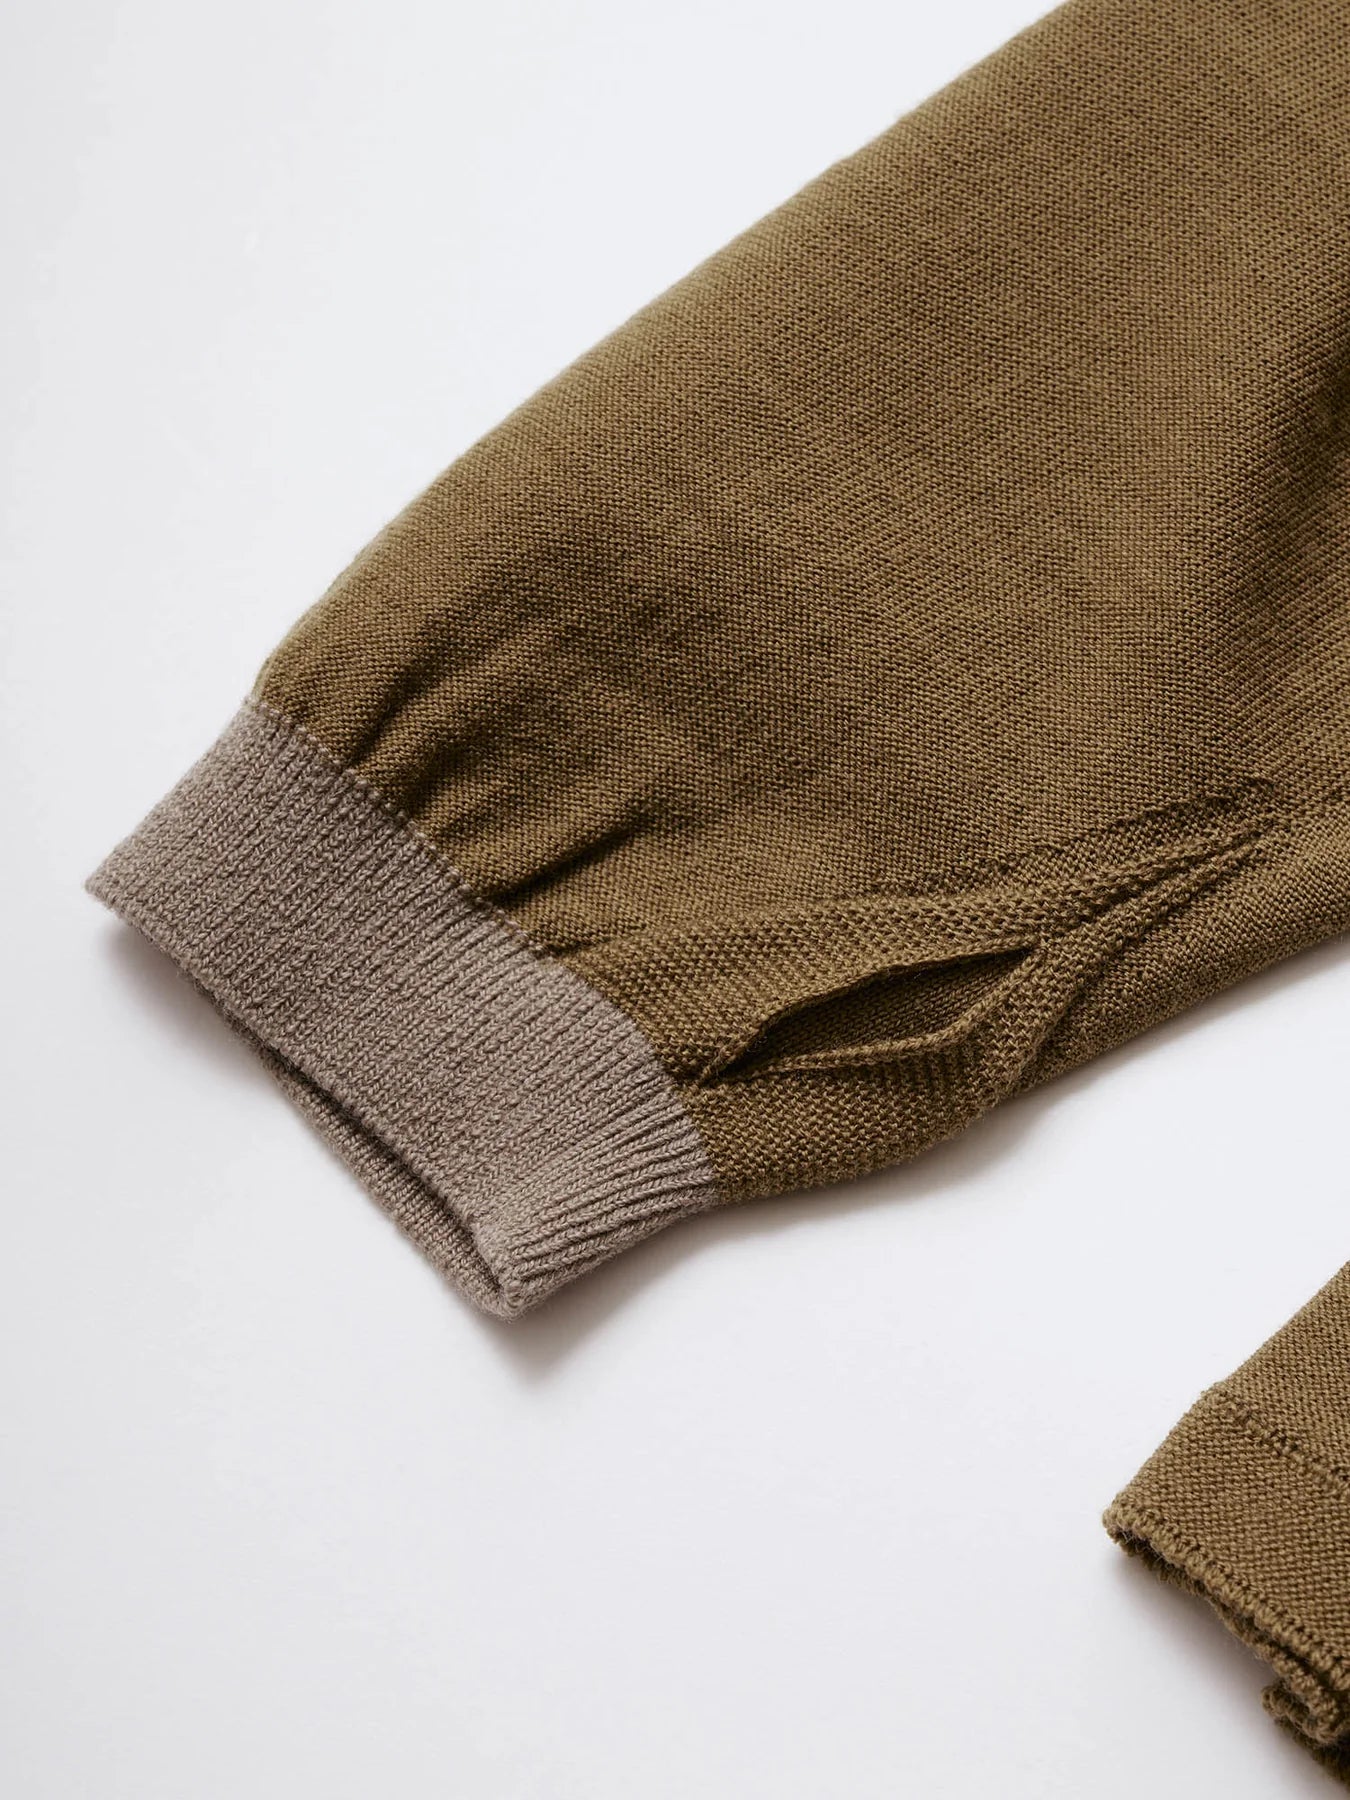 Goldwin 0 Wool Seamless Knit Top